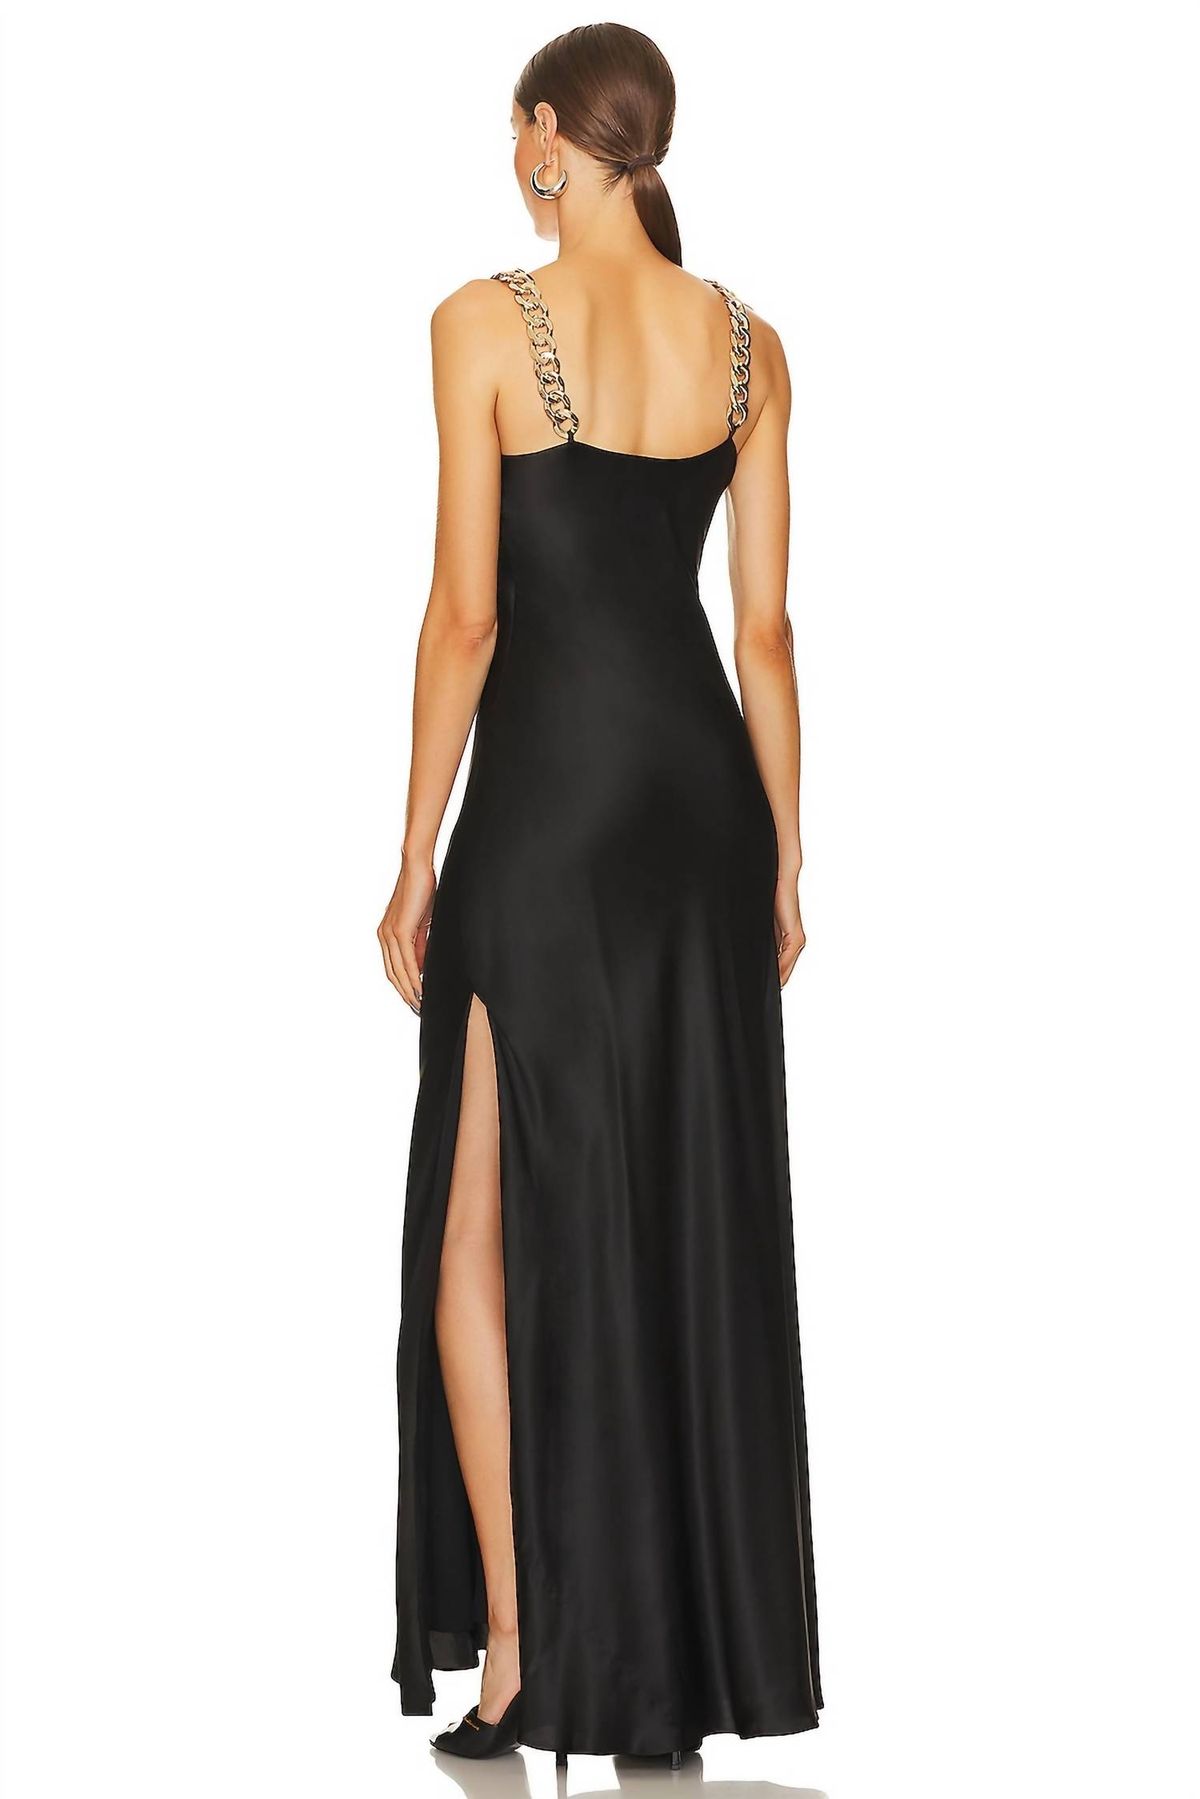 Style 1-1547655571-1901 L'Agence Size 6 Satin Black Side Slit Dress on Queenly